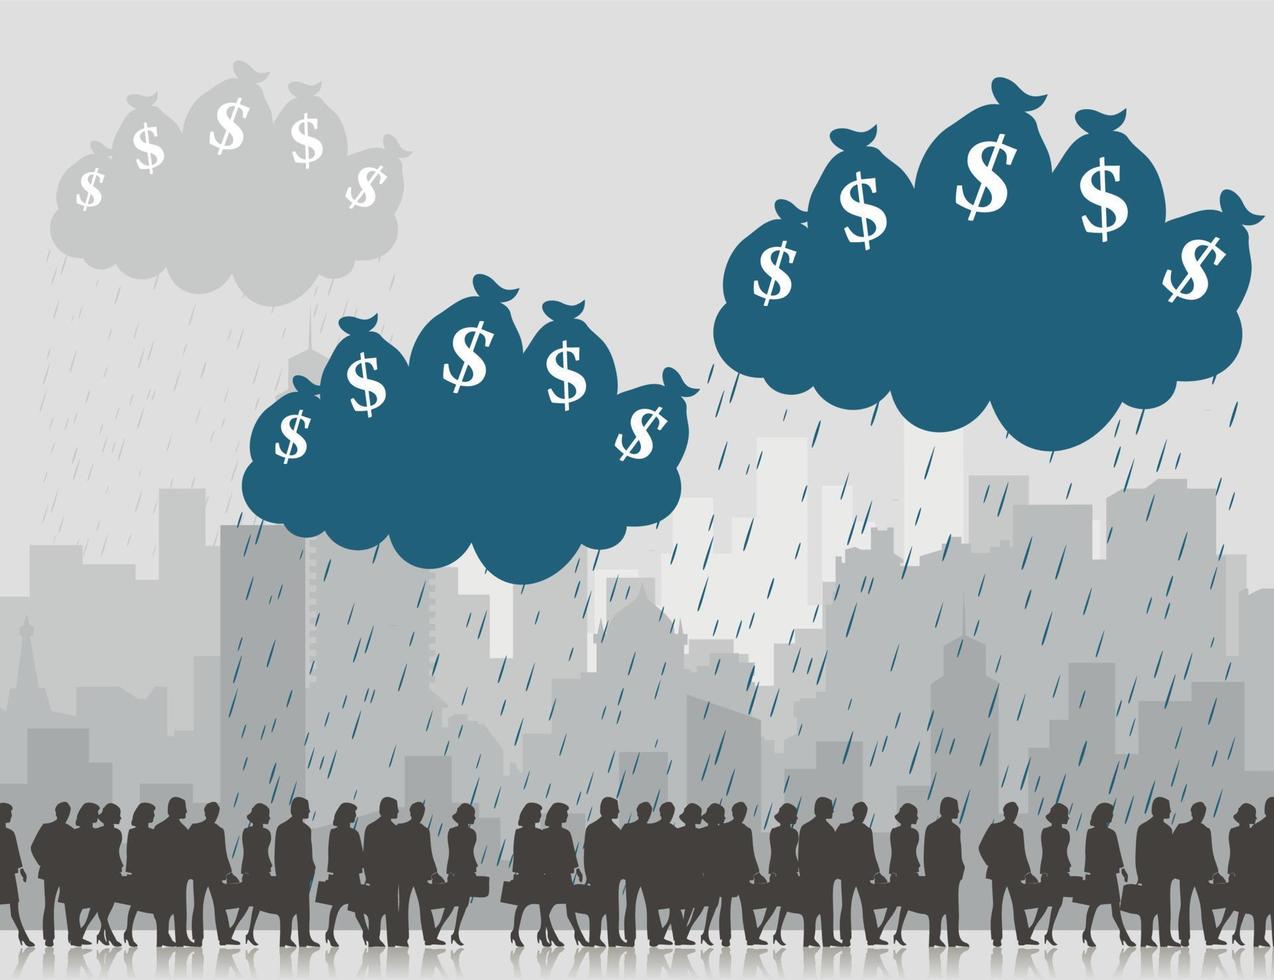 Businessmen go for work under a rain. A vector illustration